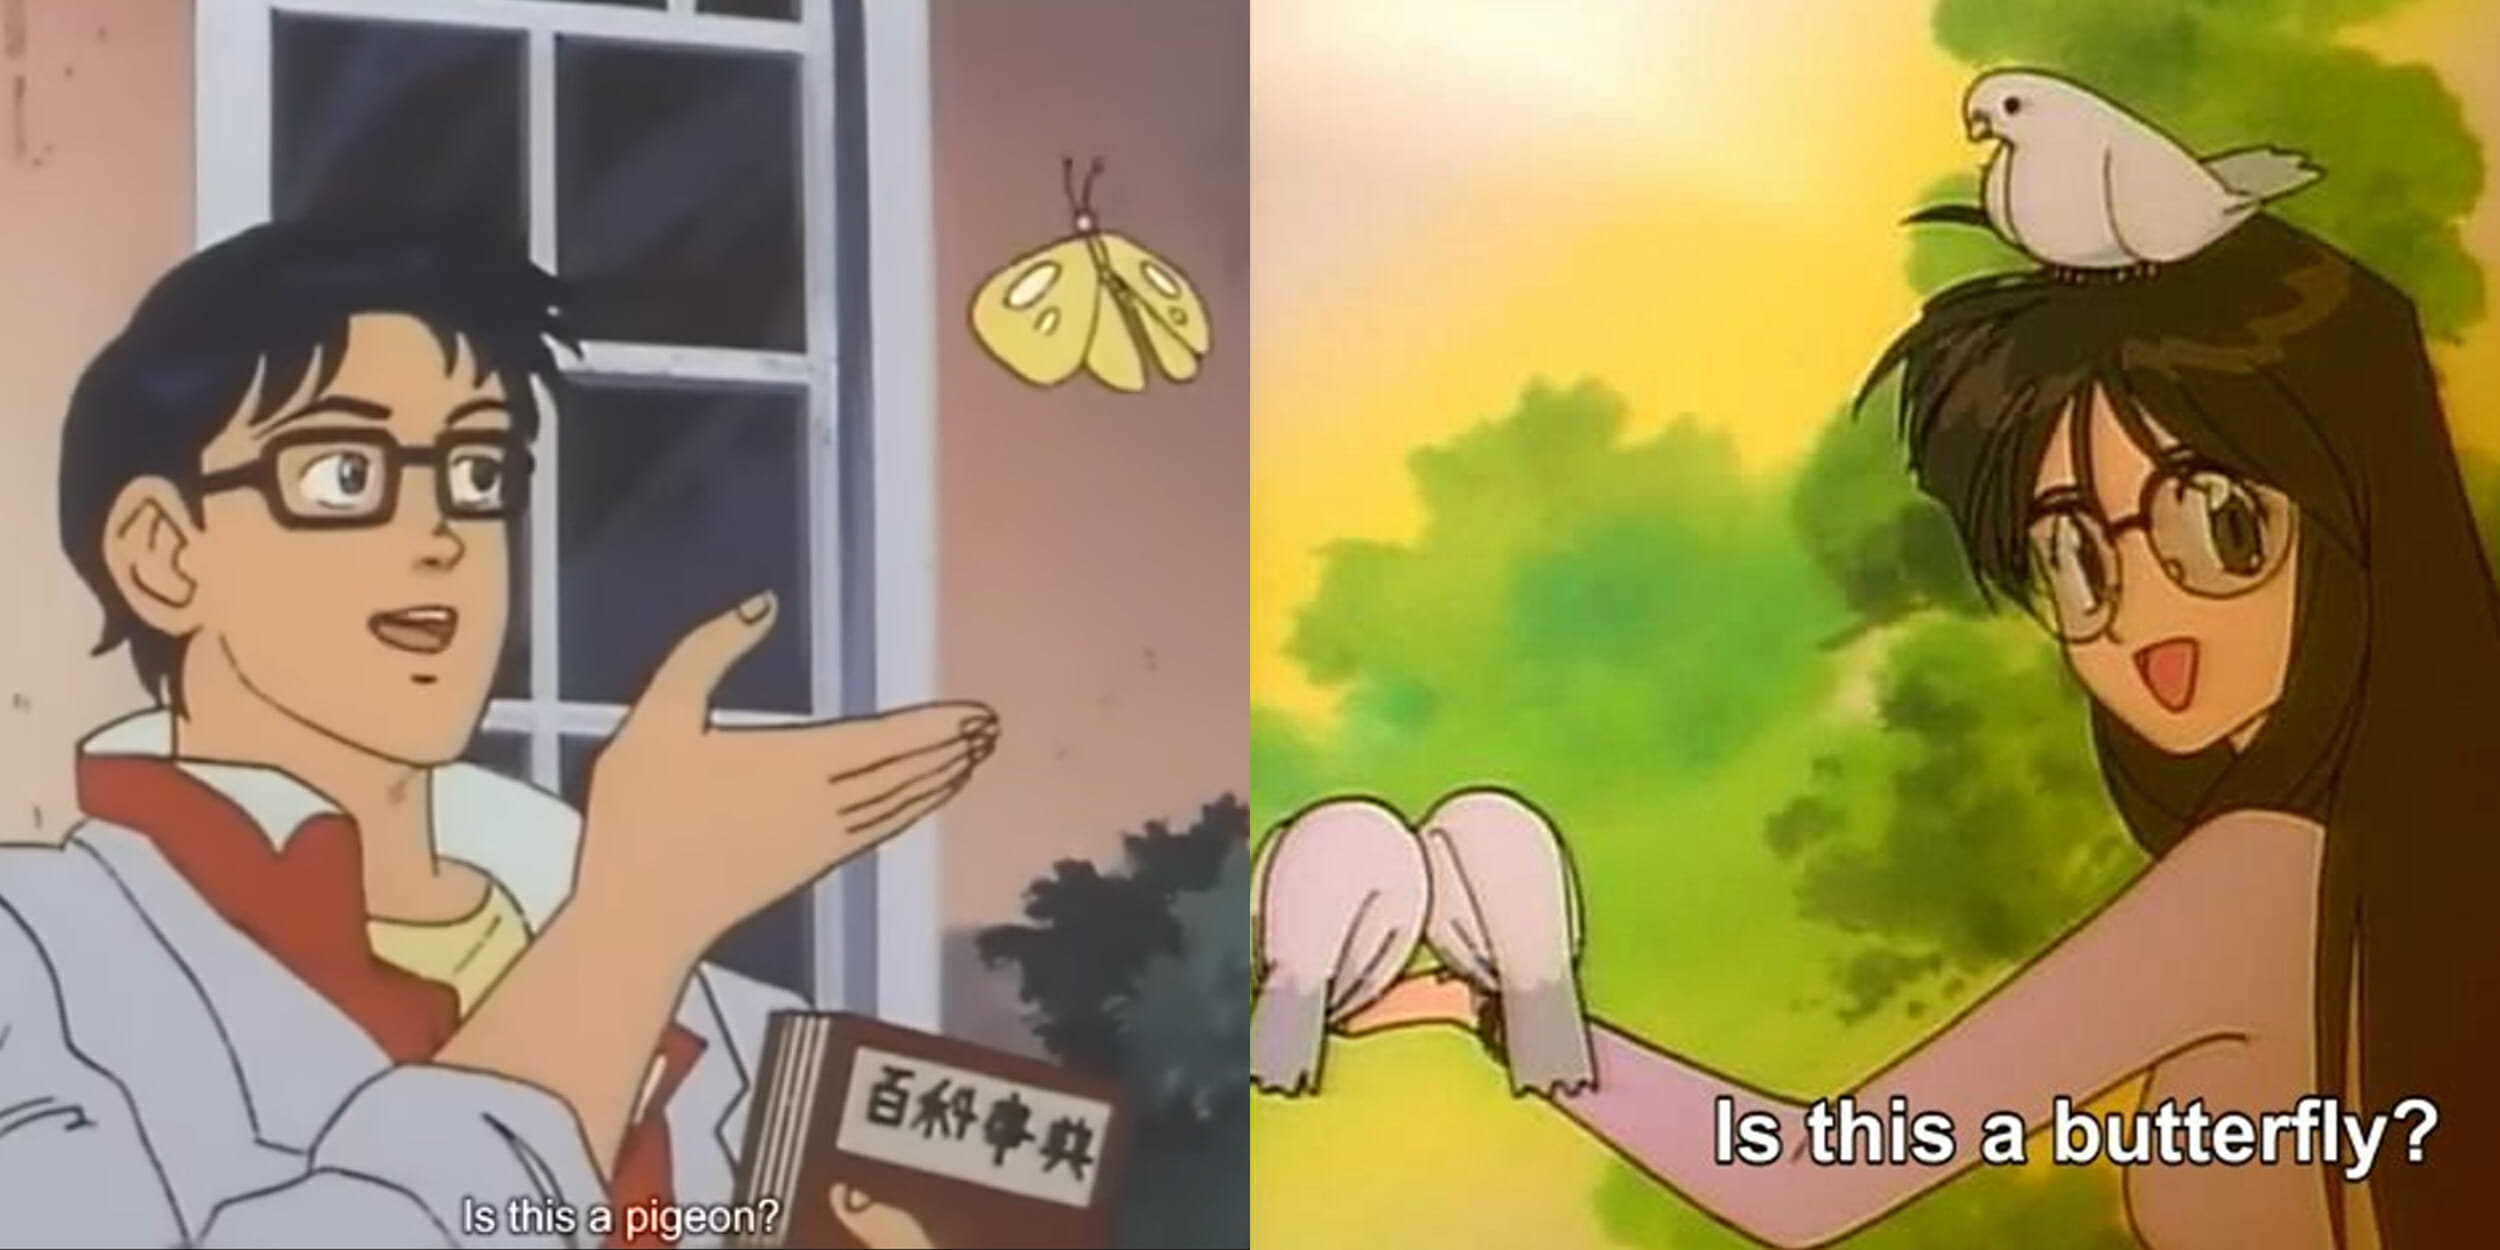 Create comics meme meme of anime with butterfly meme with butterfly anime  is this a pigeon meme  Comics  Memearsenalcom